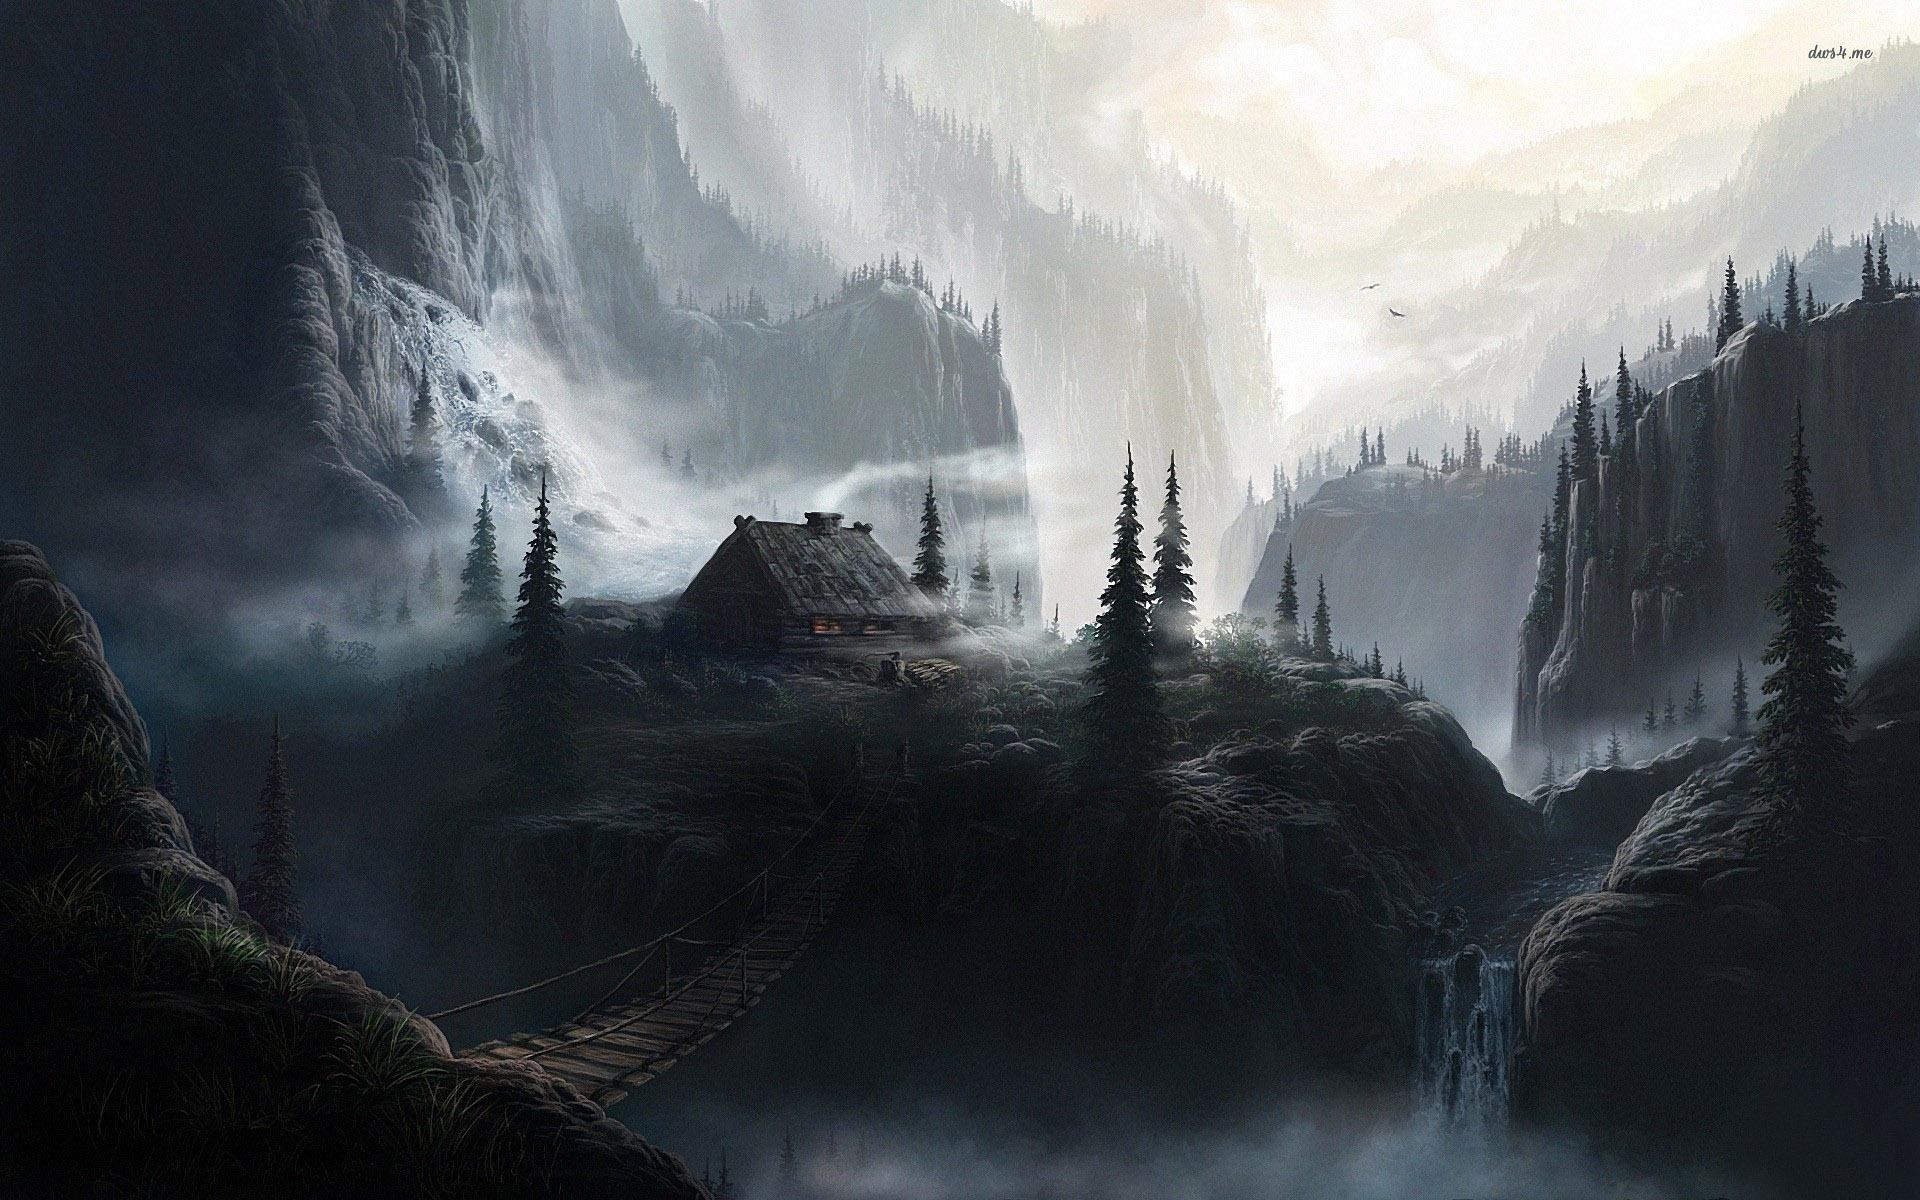 Dark Mountain Wallpapers - Top Free Dark Mountain Backgrounds